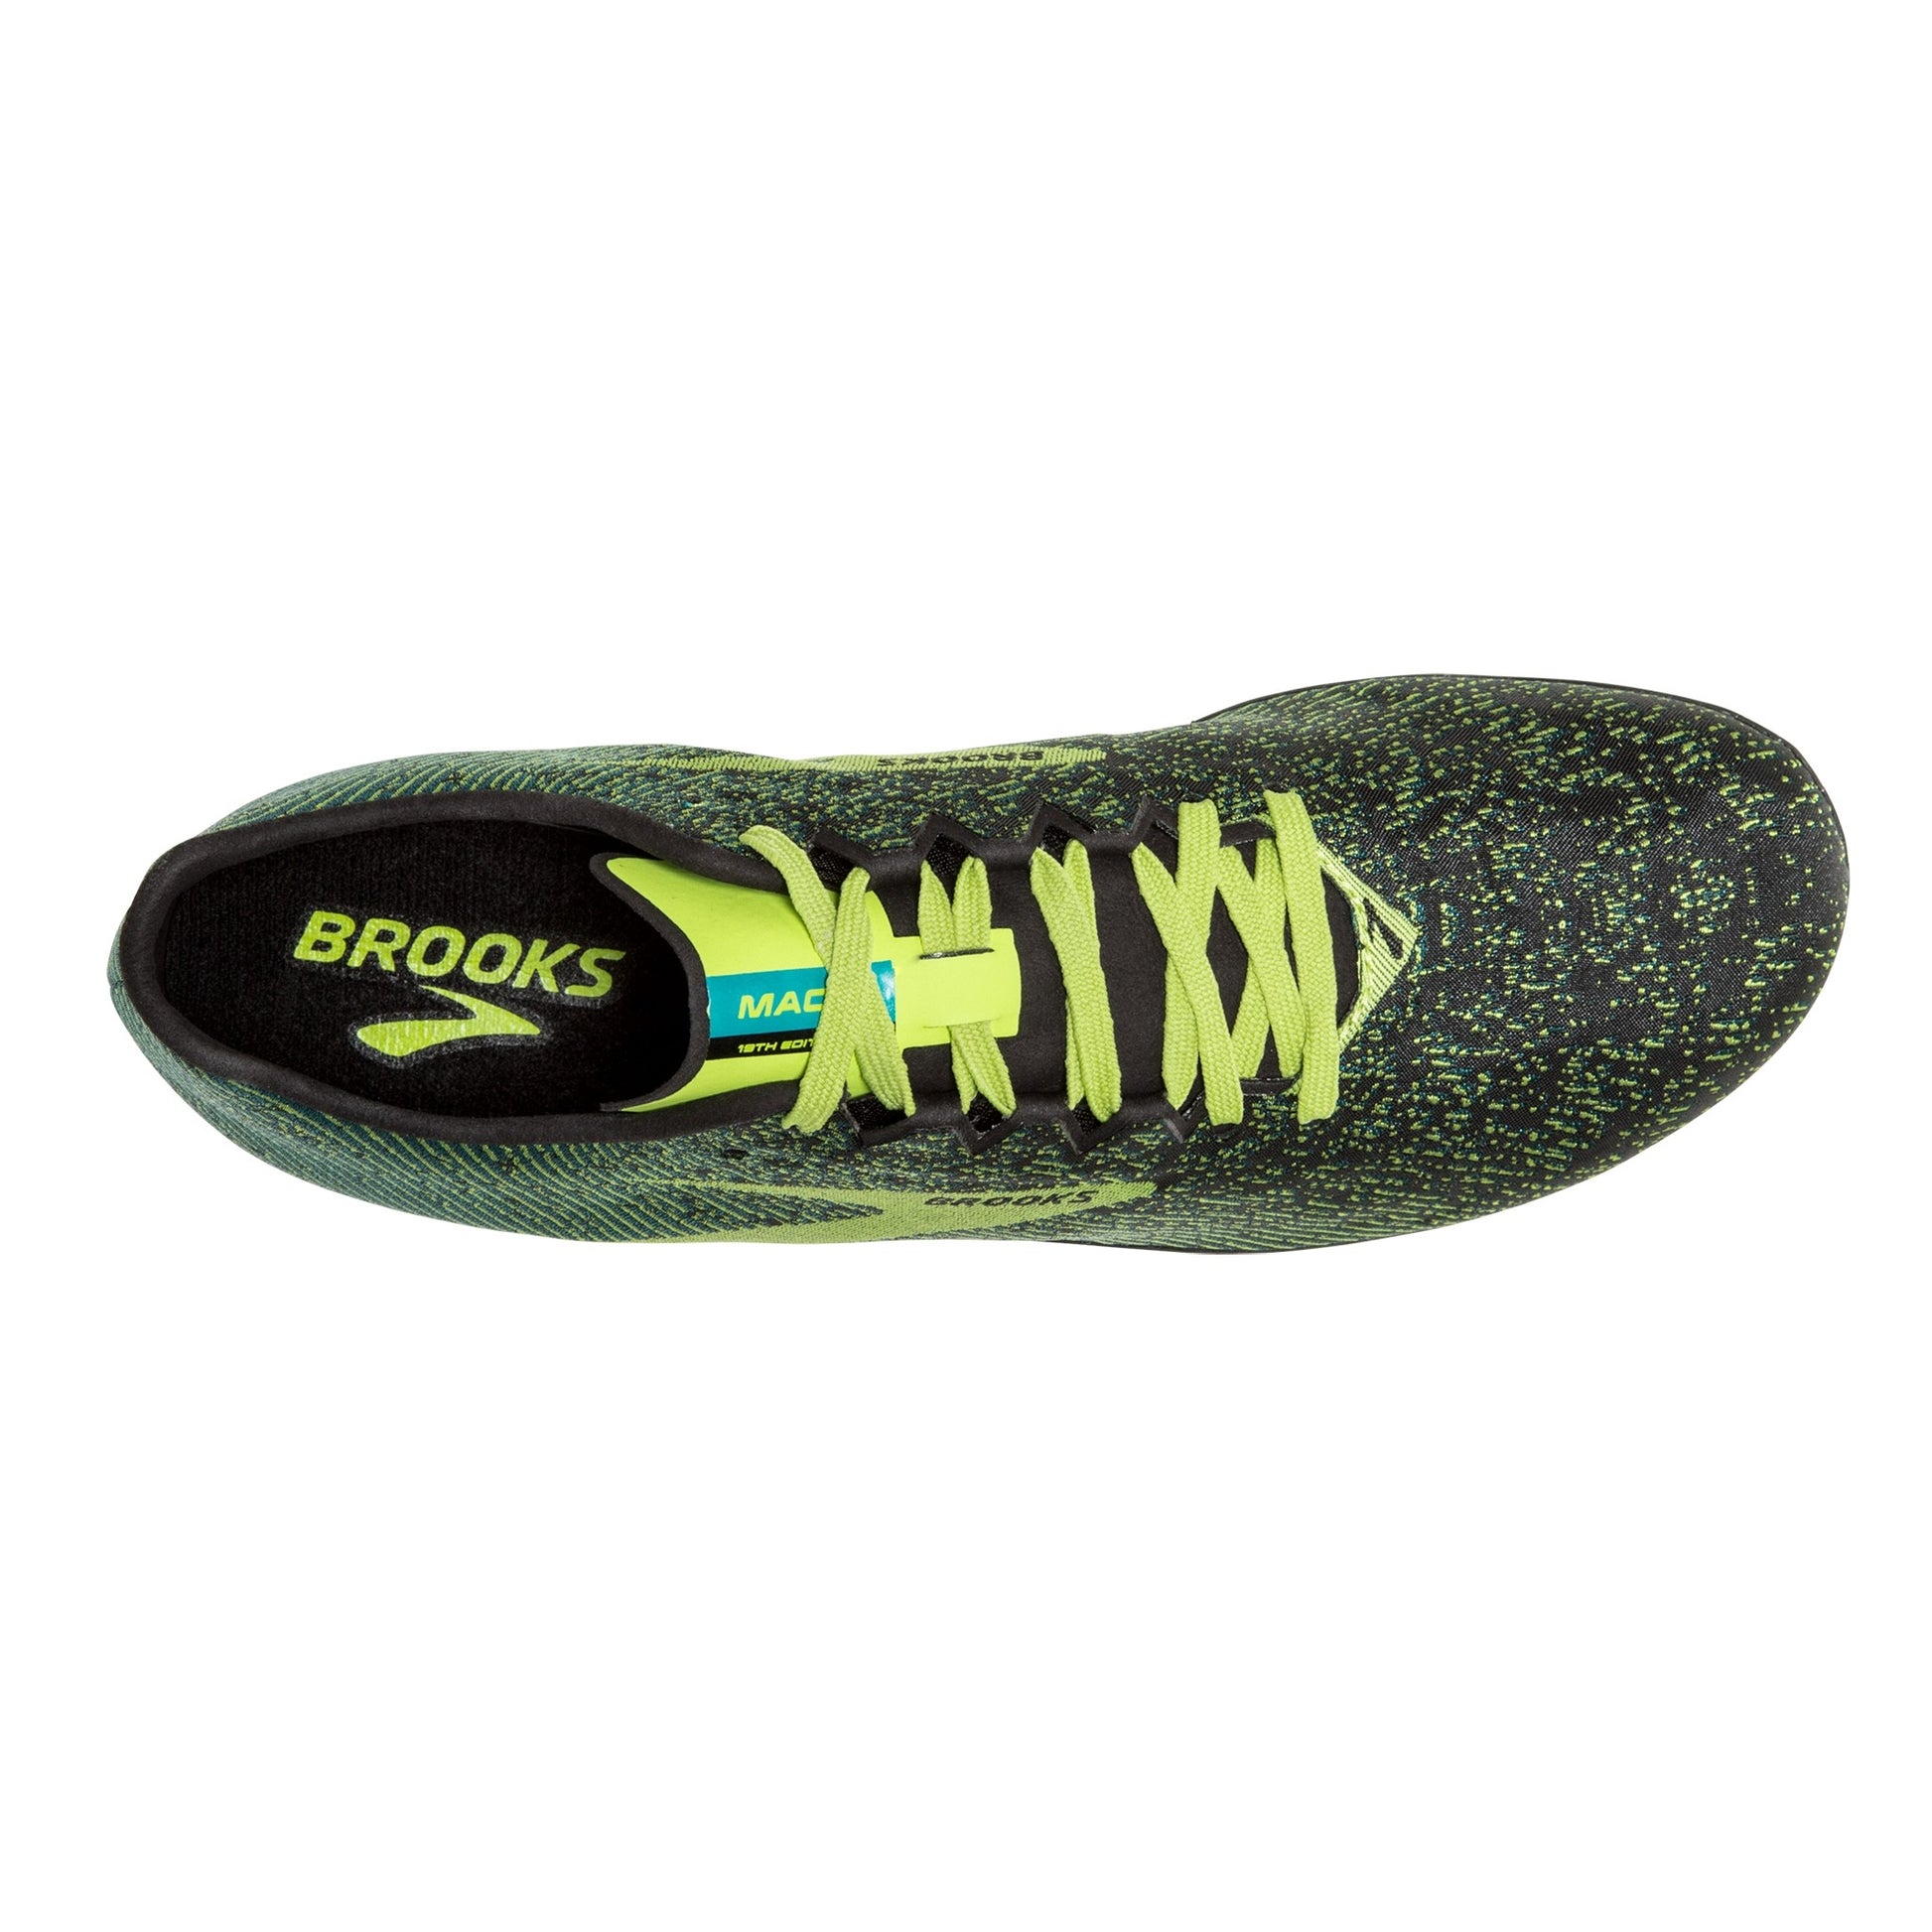 Brooks Mach 19 unisex cross country running spike, green and yellow